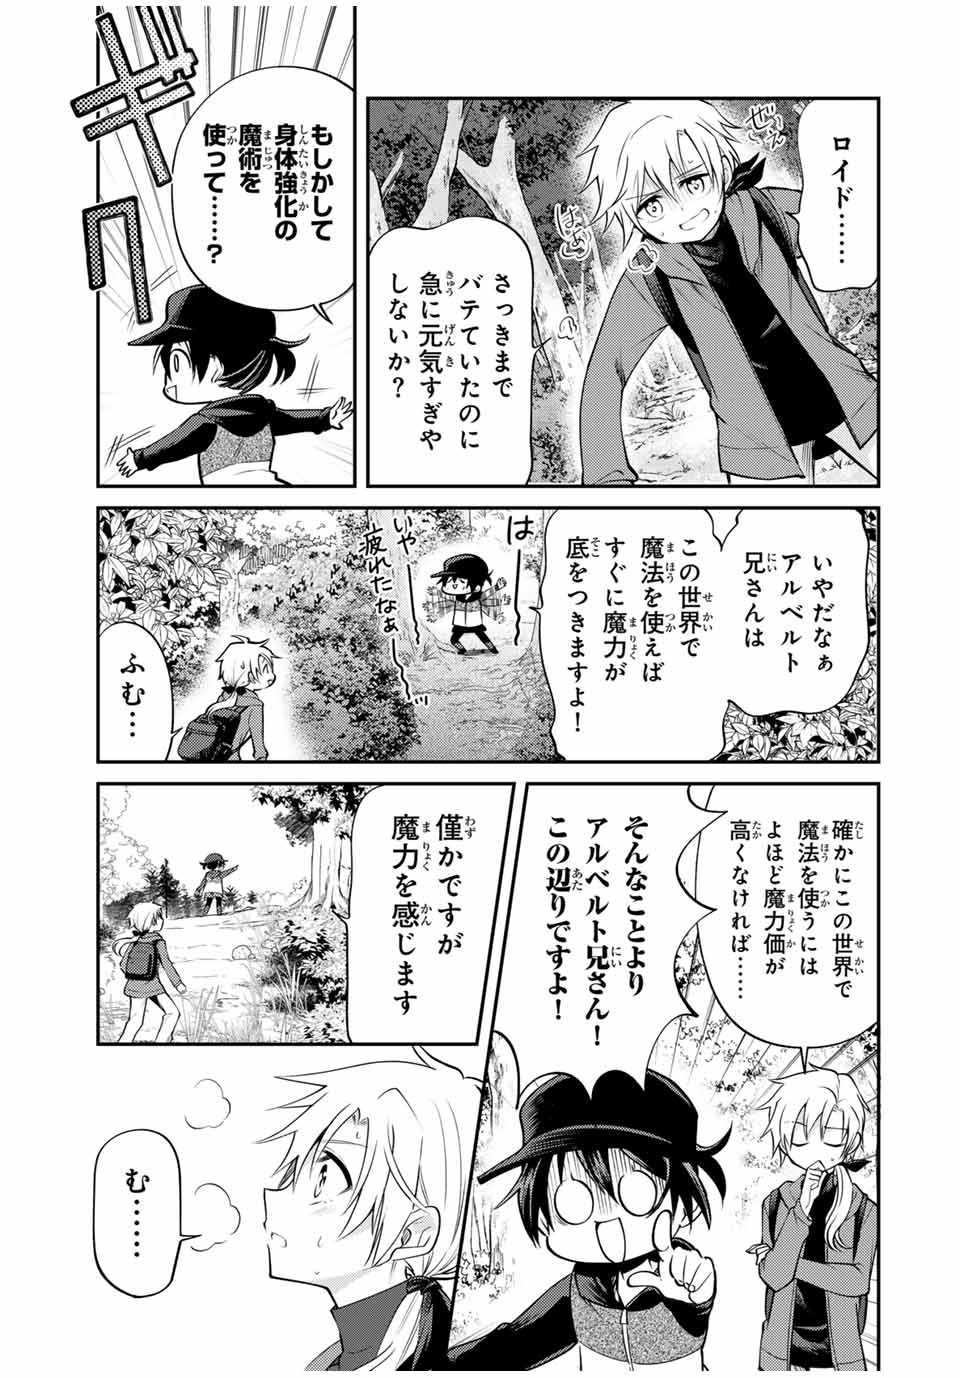 Gendai Teni no Dai Ni Ouji - Chapter 9.1 - Page 7